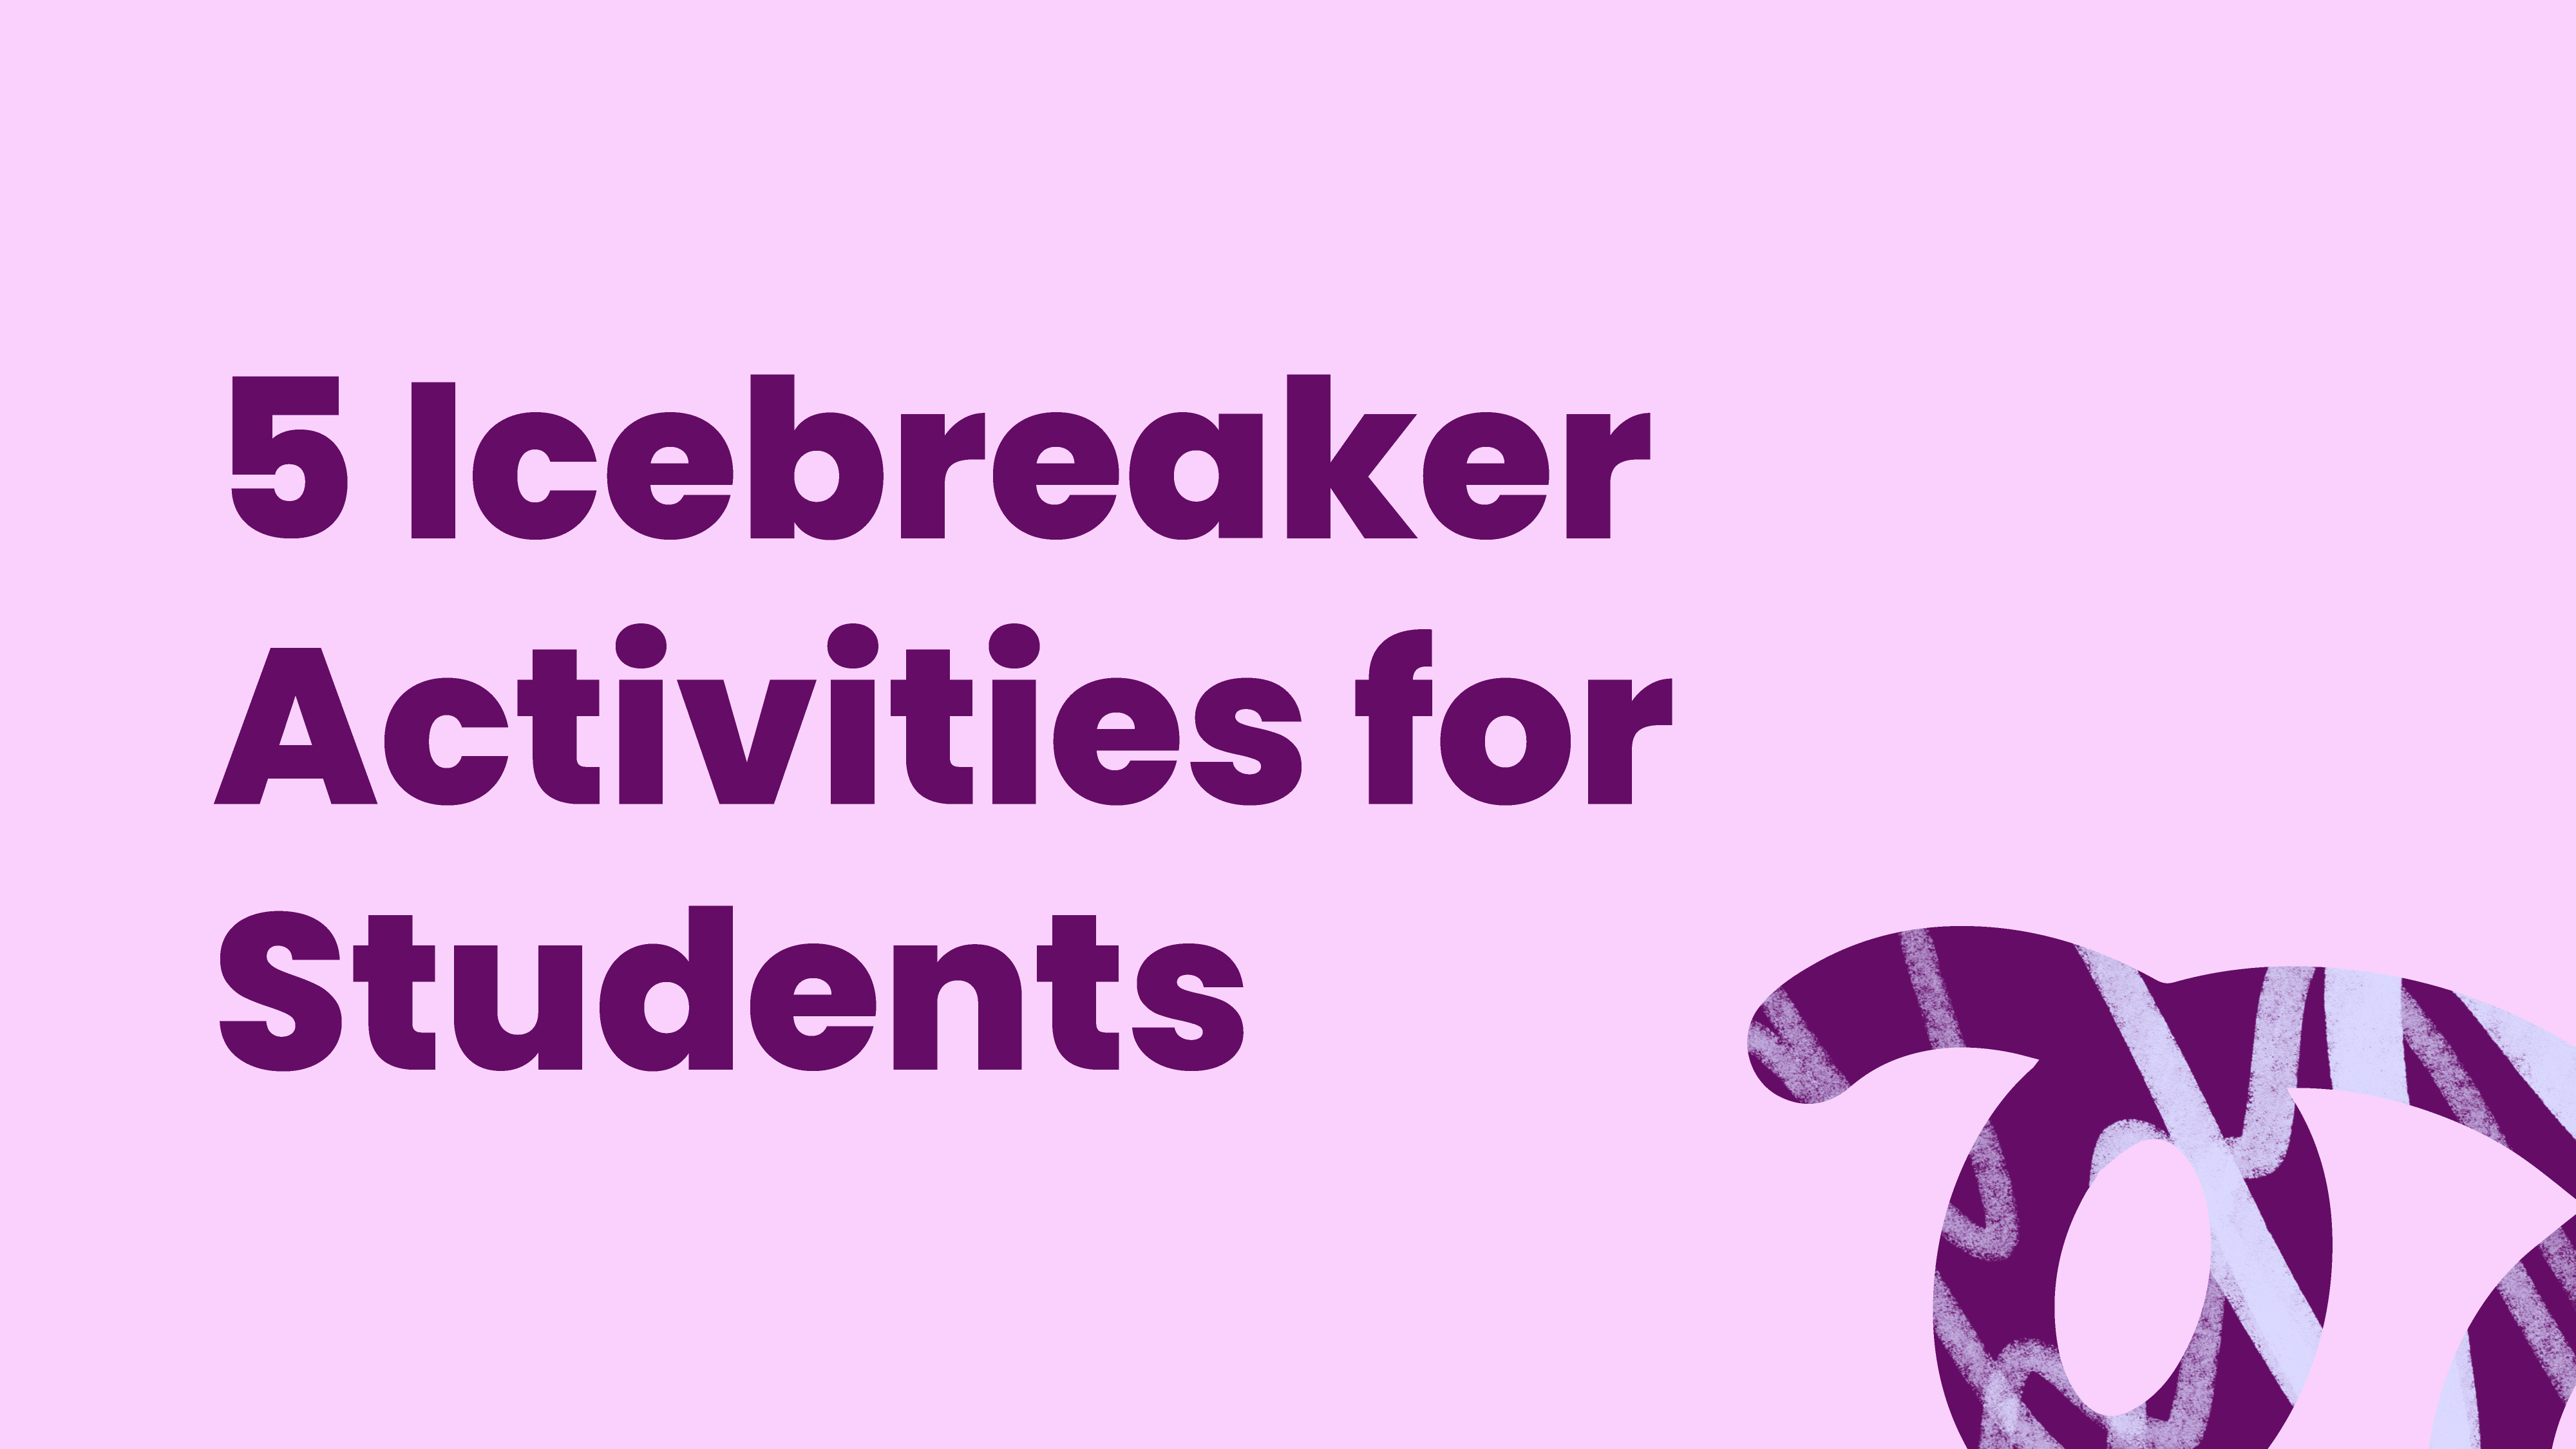 5 ice breaker activities for students - Kami